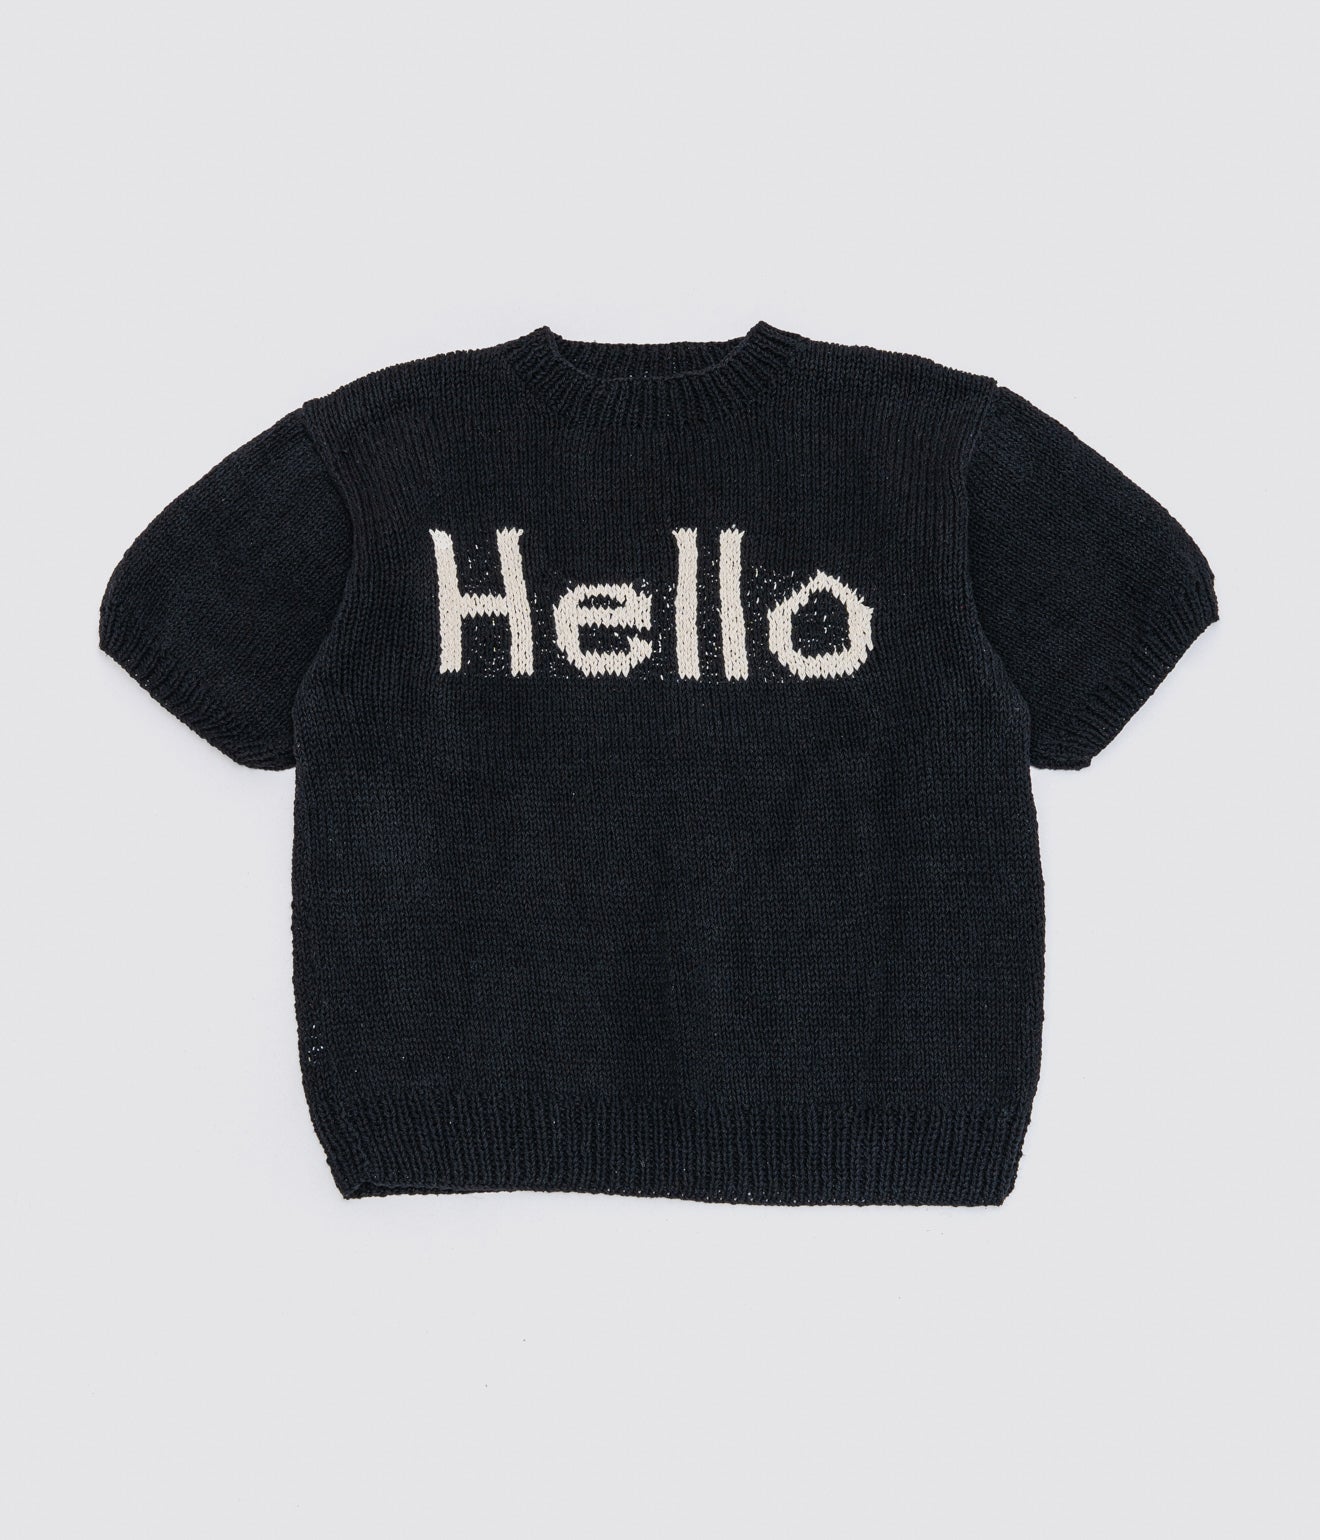 MacMahon Knitting Mills "S/S Crew Neck Knit-Hello" Black - WEAREALLANIMALS